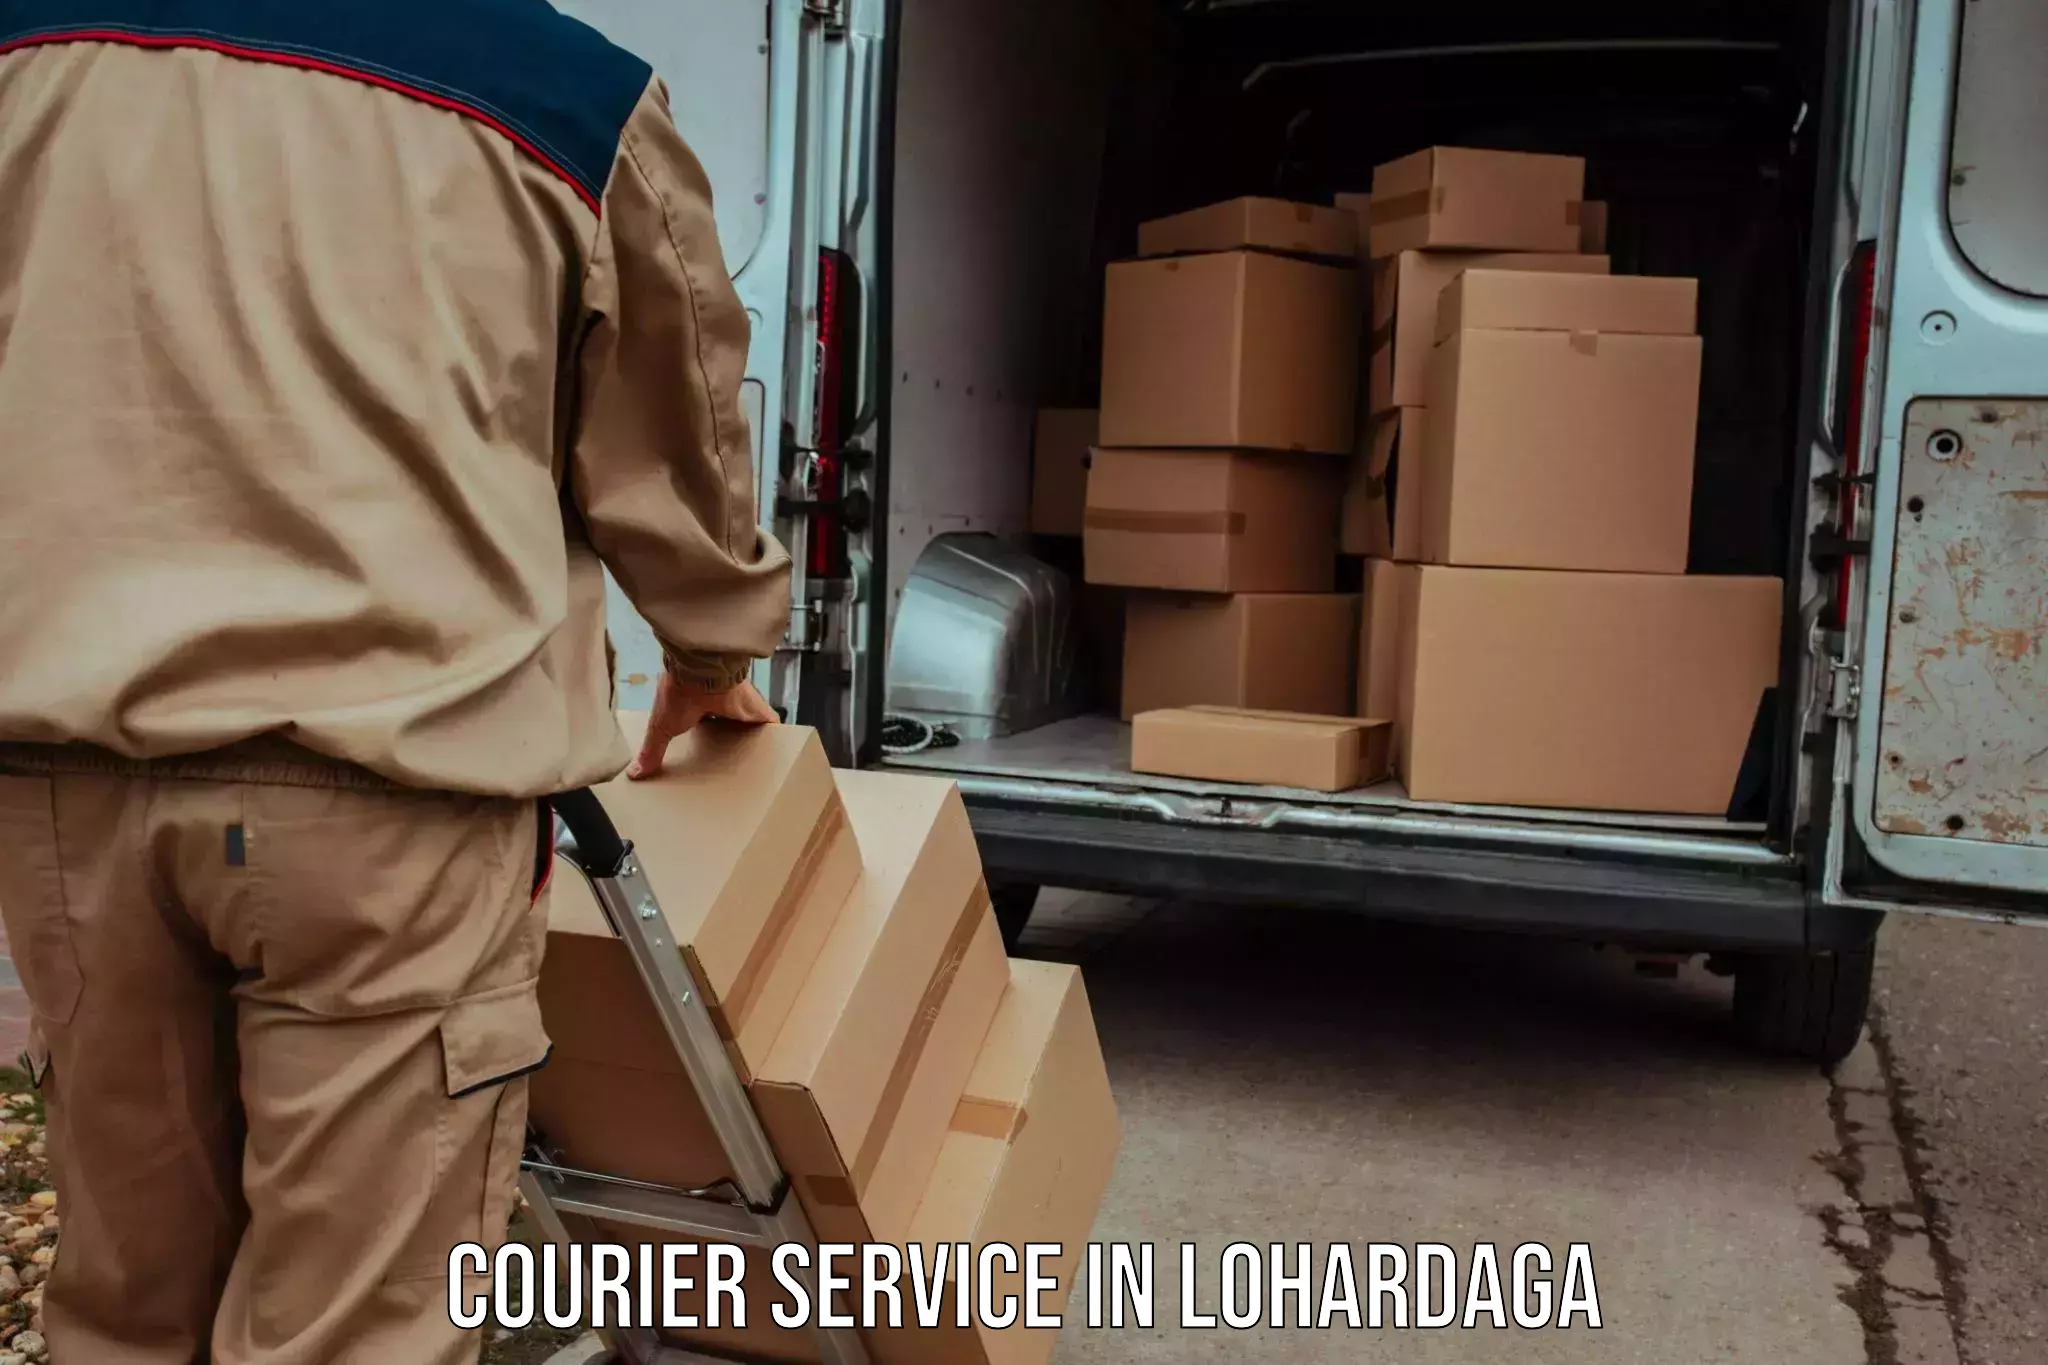 Subscription-based courier in Lohardaga